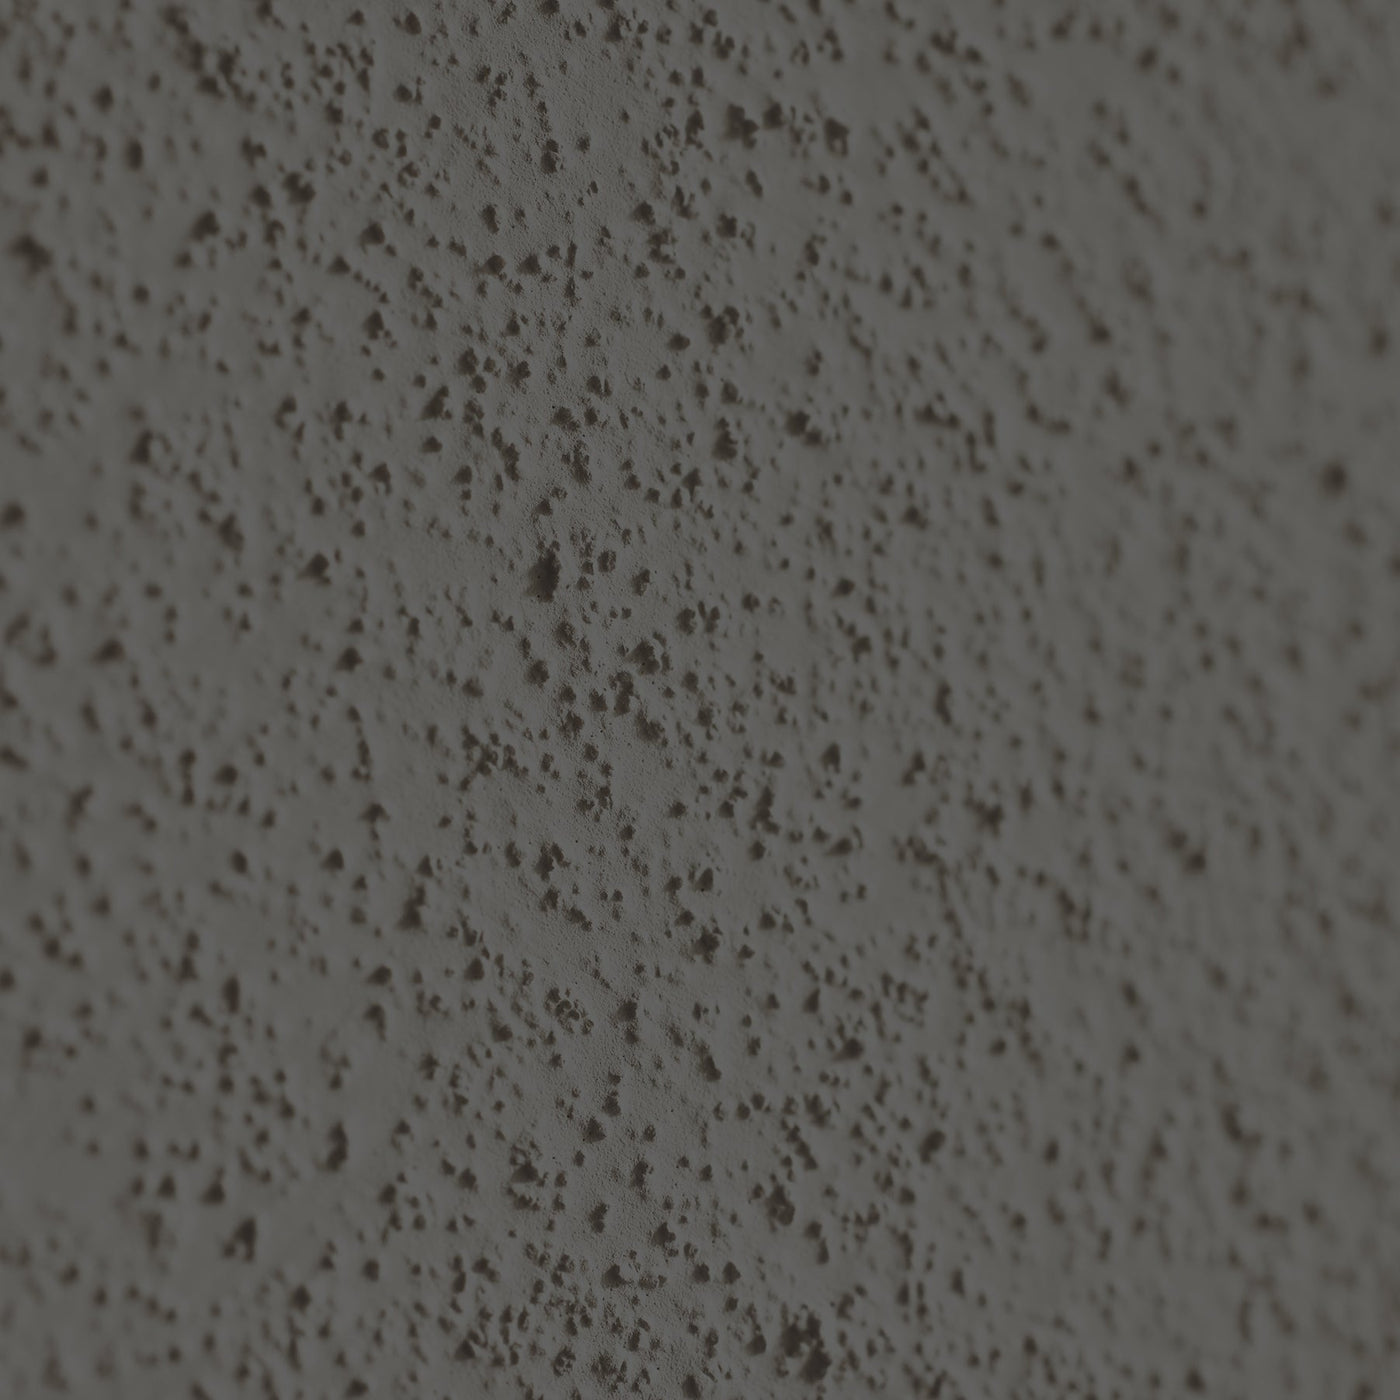 Graphite wall scrub - SHADES by Eric Kuster